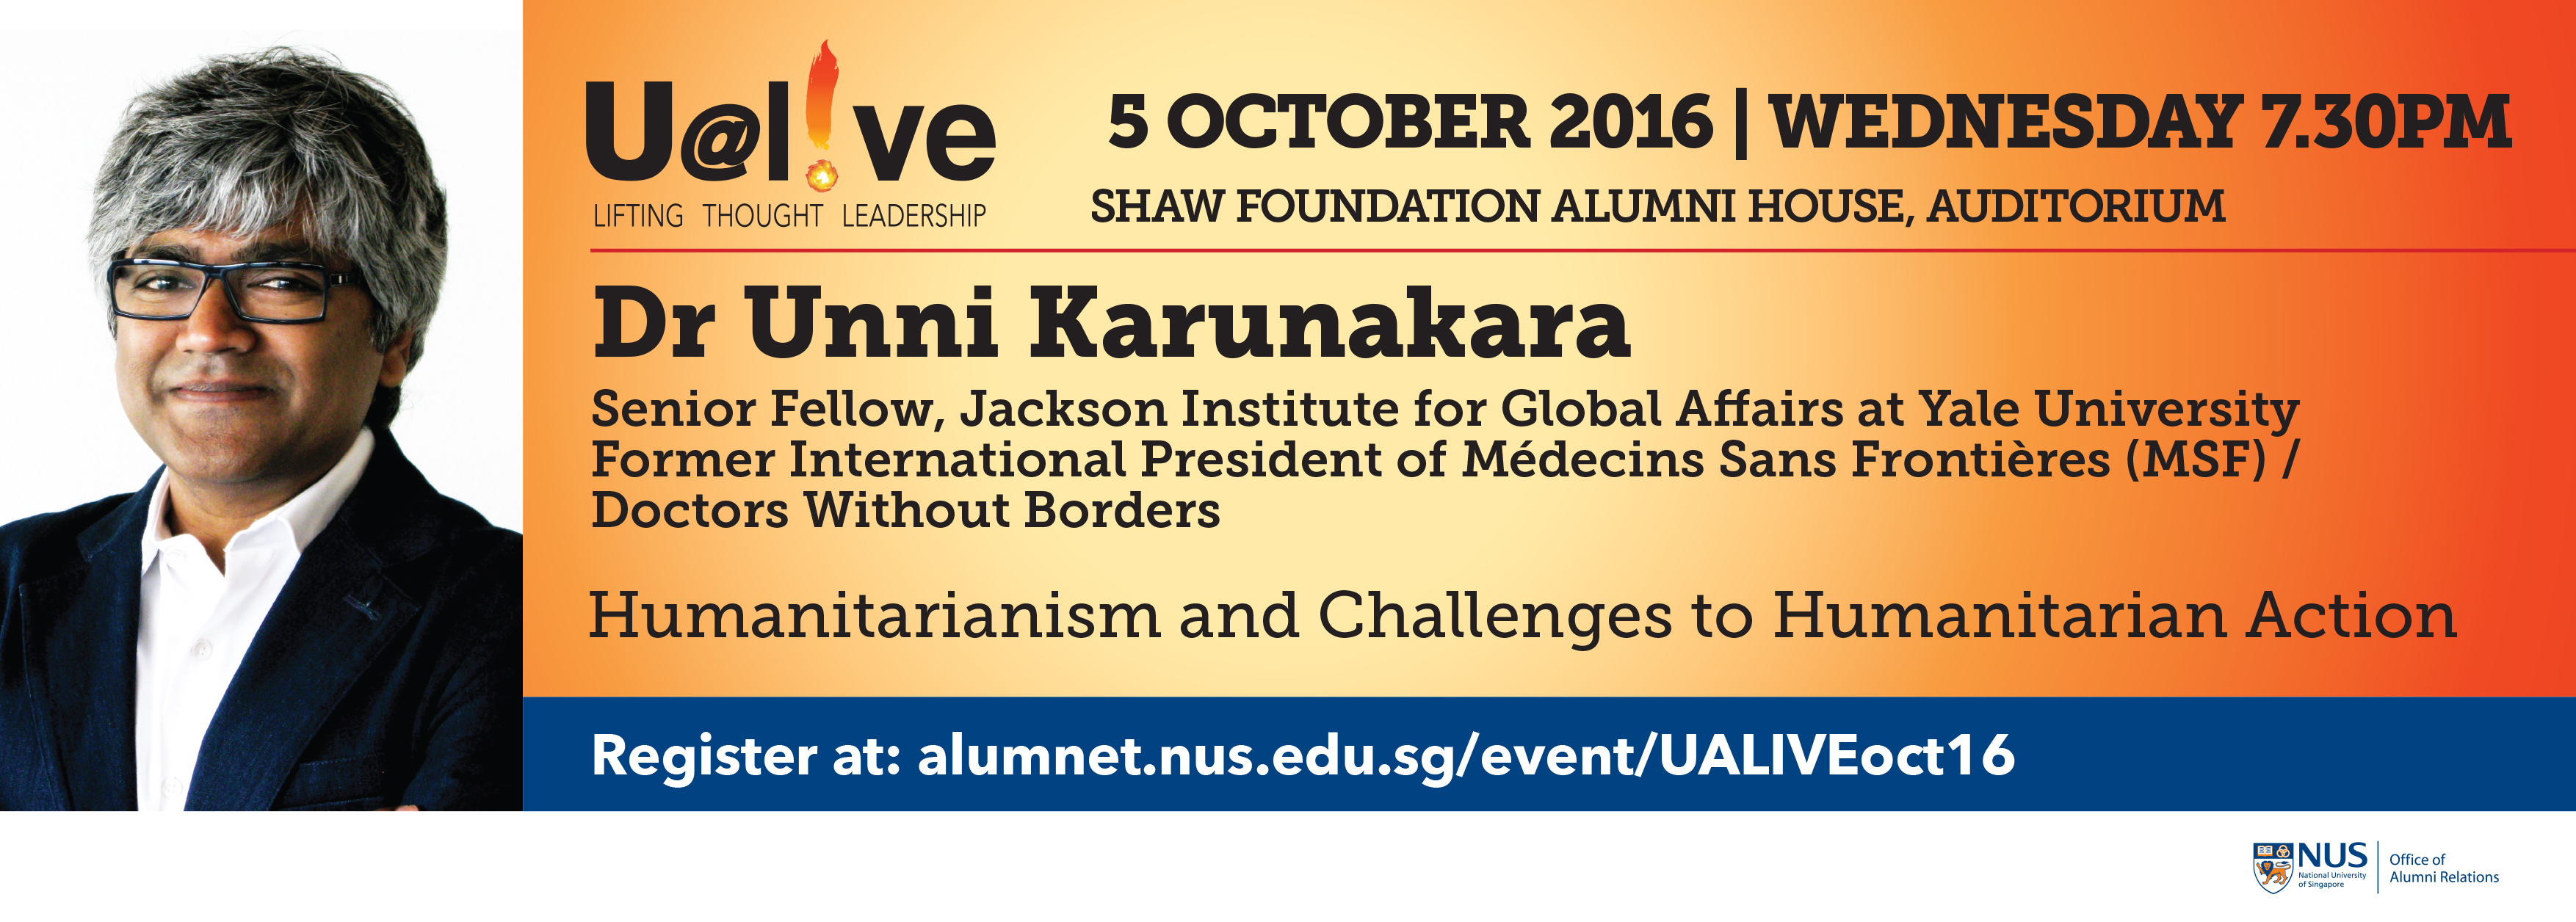 U@live featuring Dr Unni Karunakara